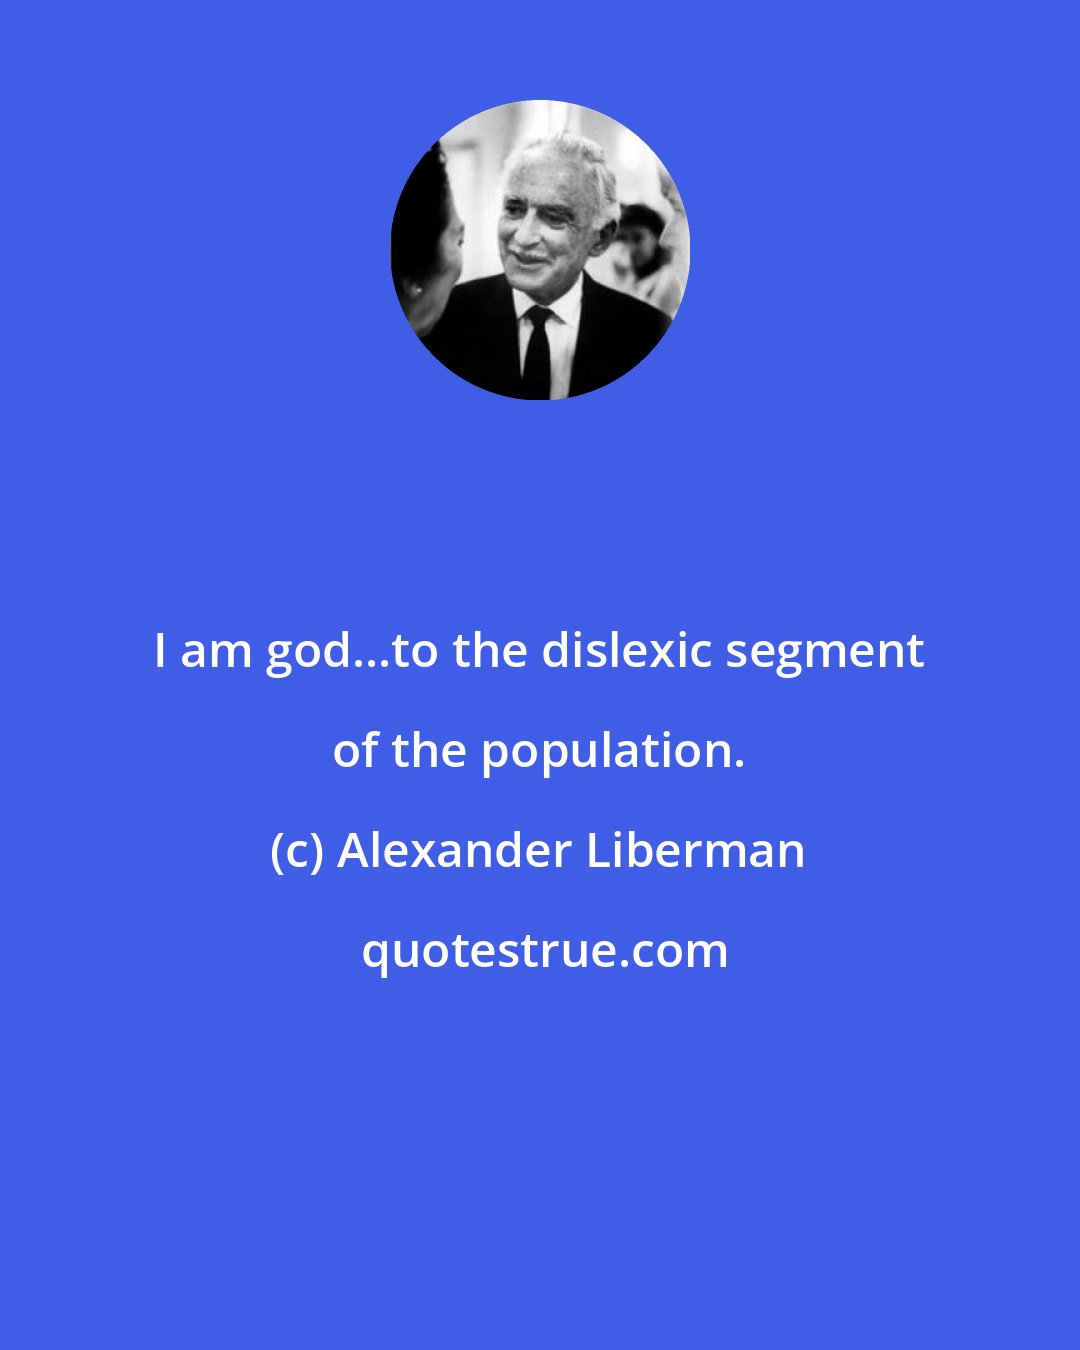 Alexander Liberman: I am god...to the dislexic segment of the population.